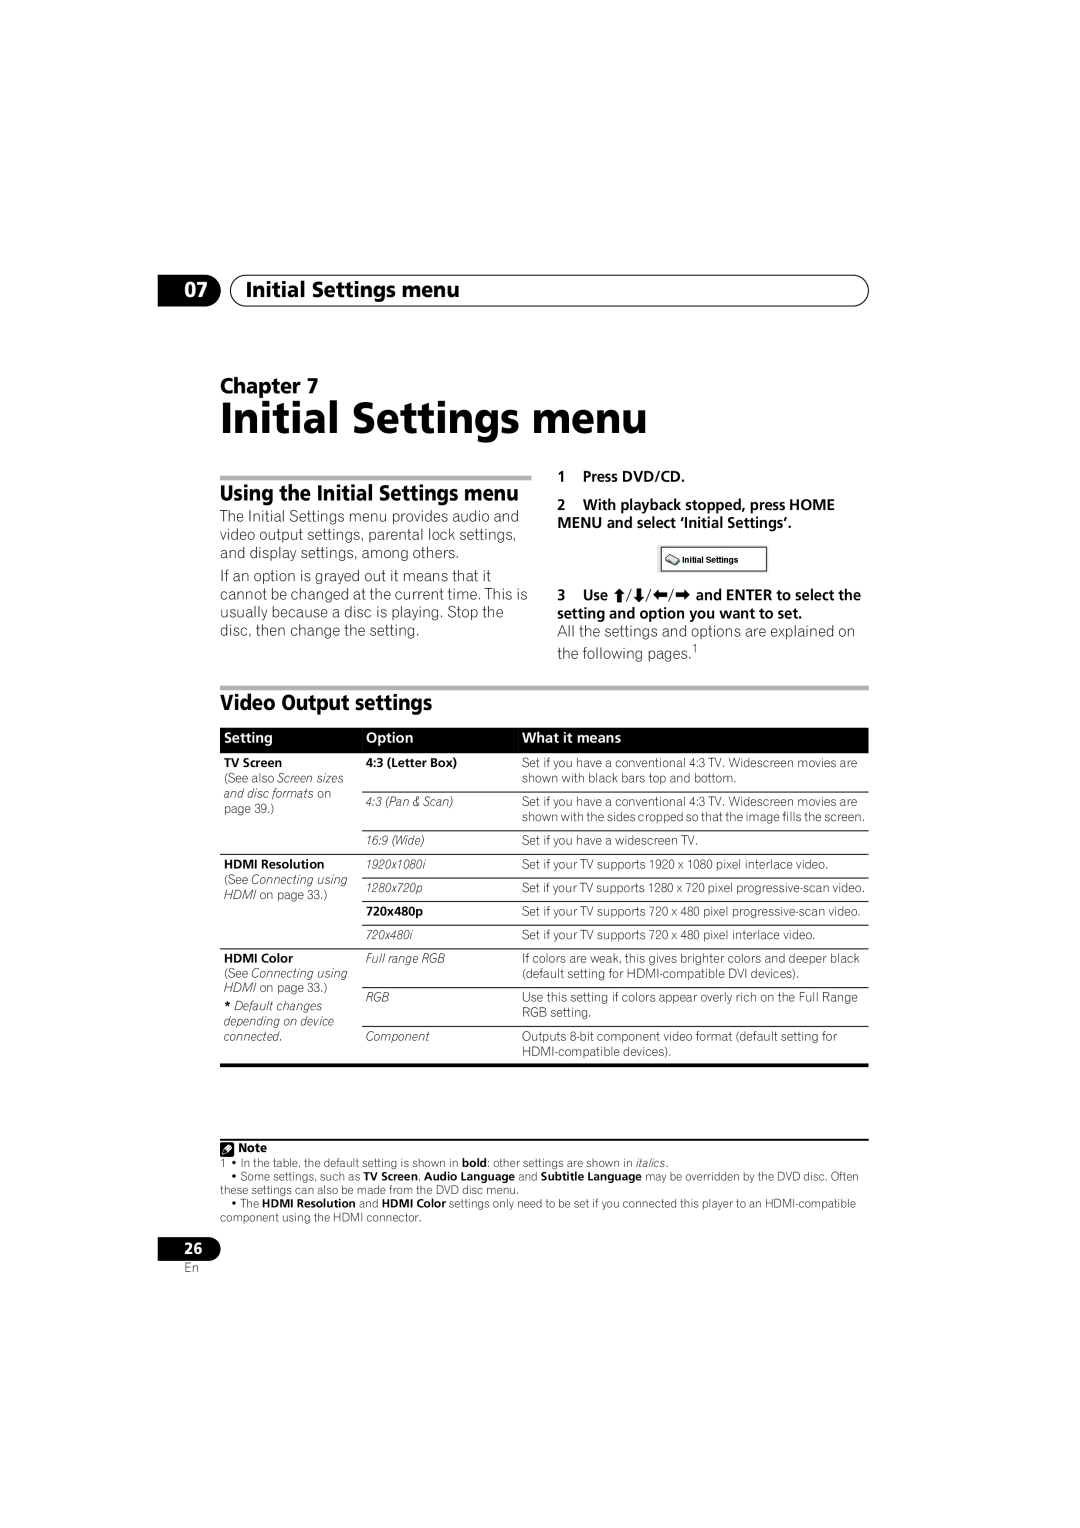 Pioneer HTZ-360DV 07Initial Settings menu Chapter, Using the Initial Settings menu, Video Output settings, Option 